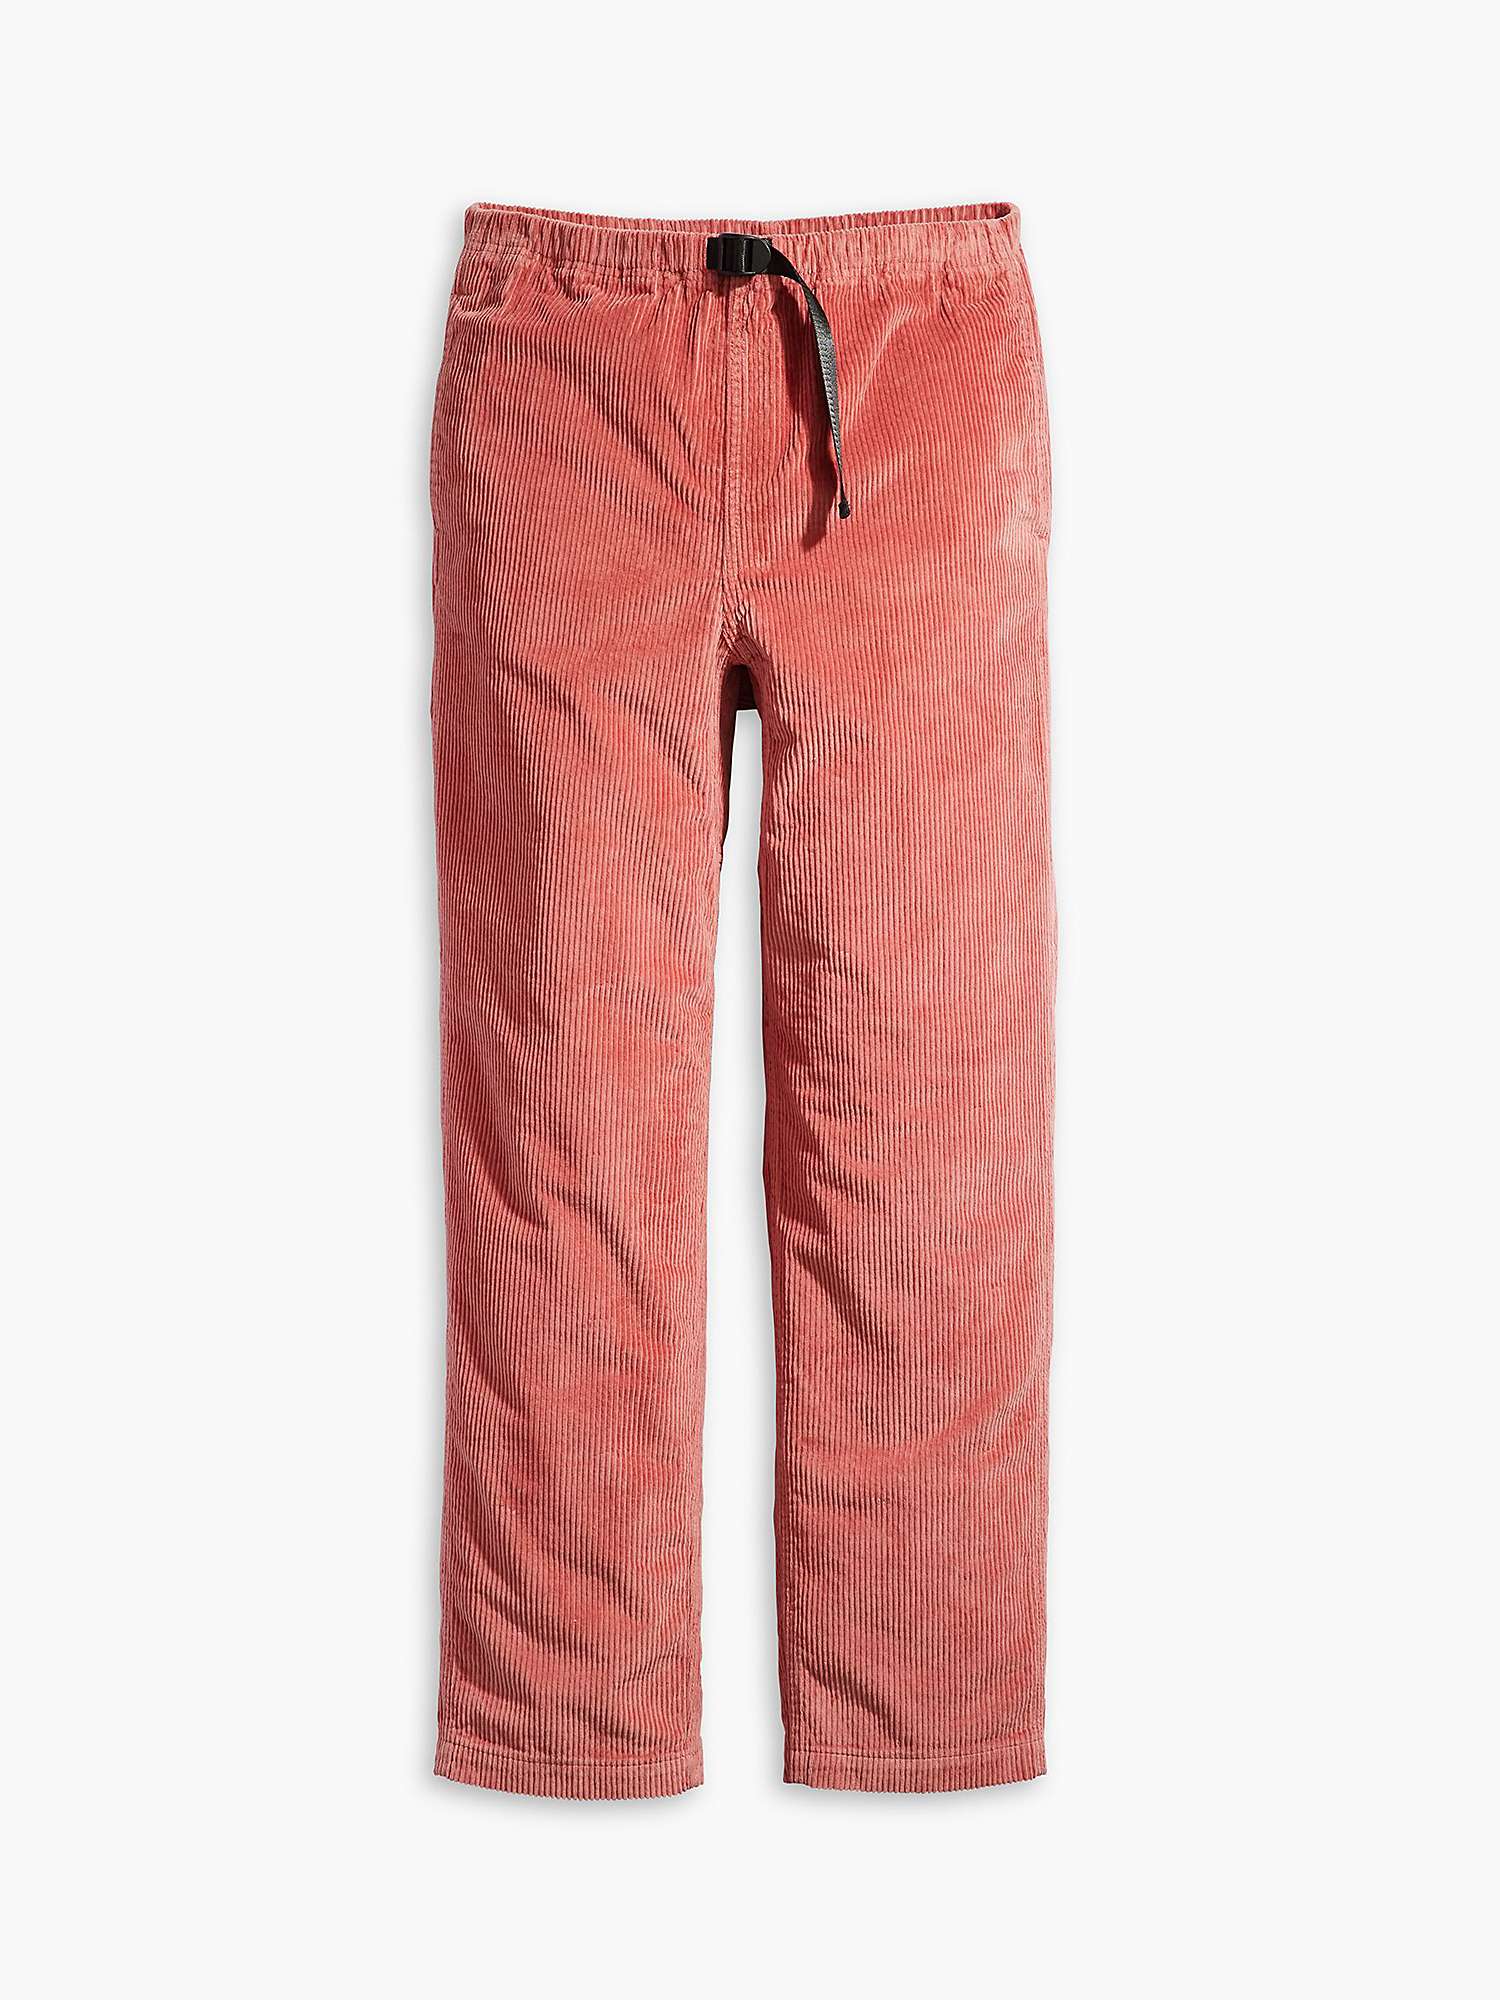 Buy Levi's Skate Q Release Trousers, Dusty Cedar Online at johnlewis.com